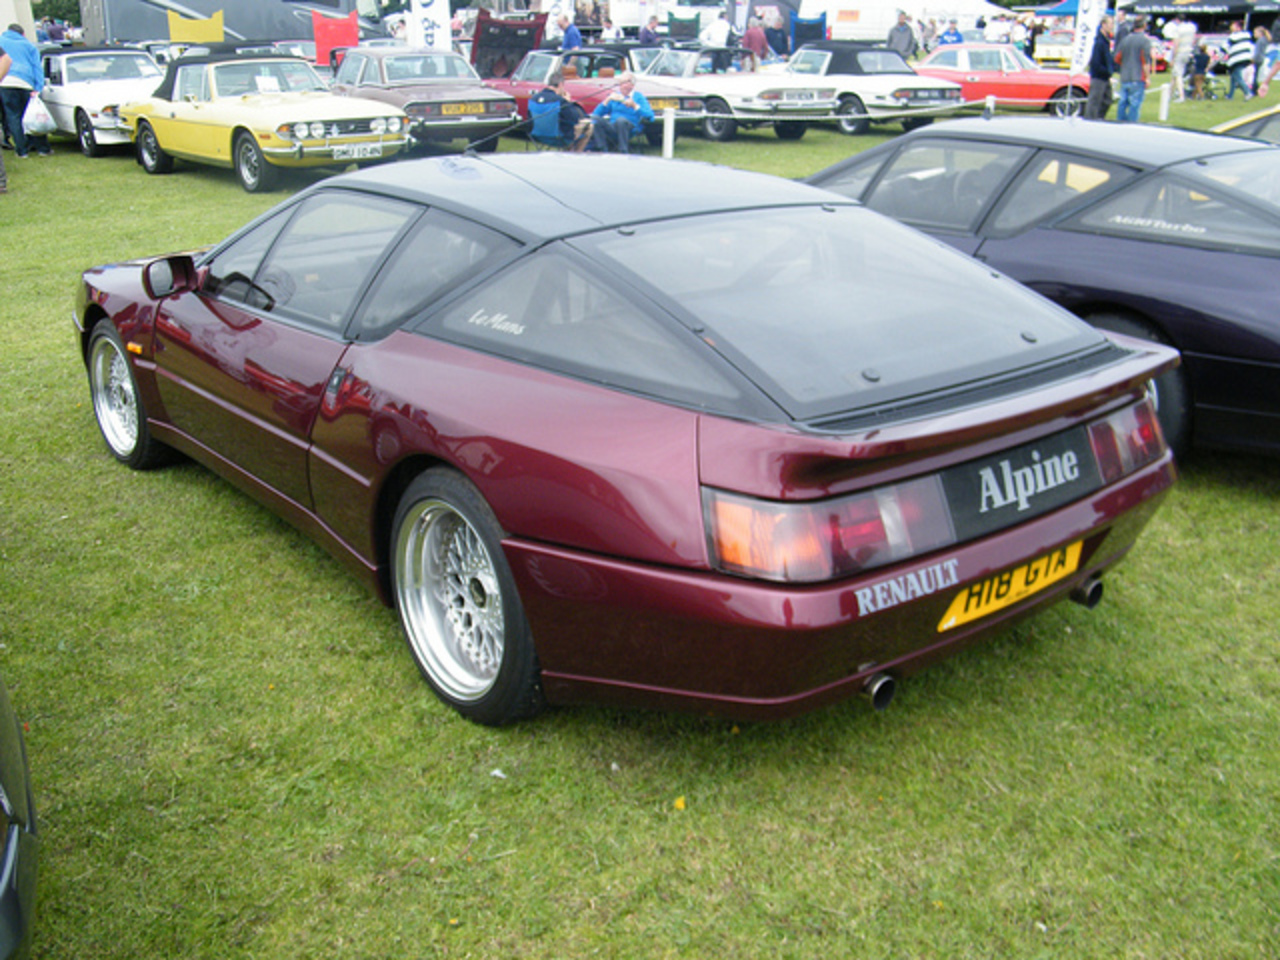 1990 Renault Alpine V6 GTA Turbo 'Le Mans' | Flickr - Photo Sharing!